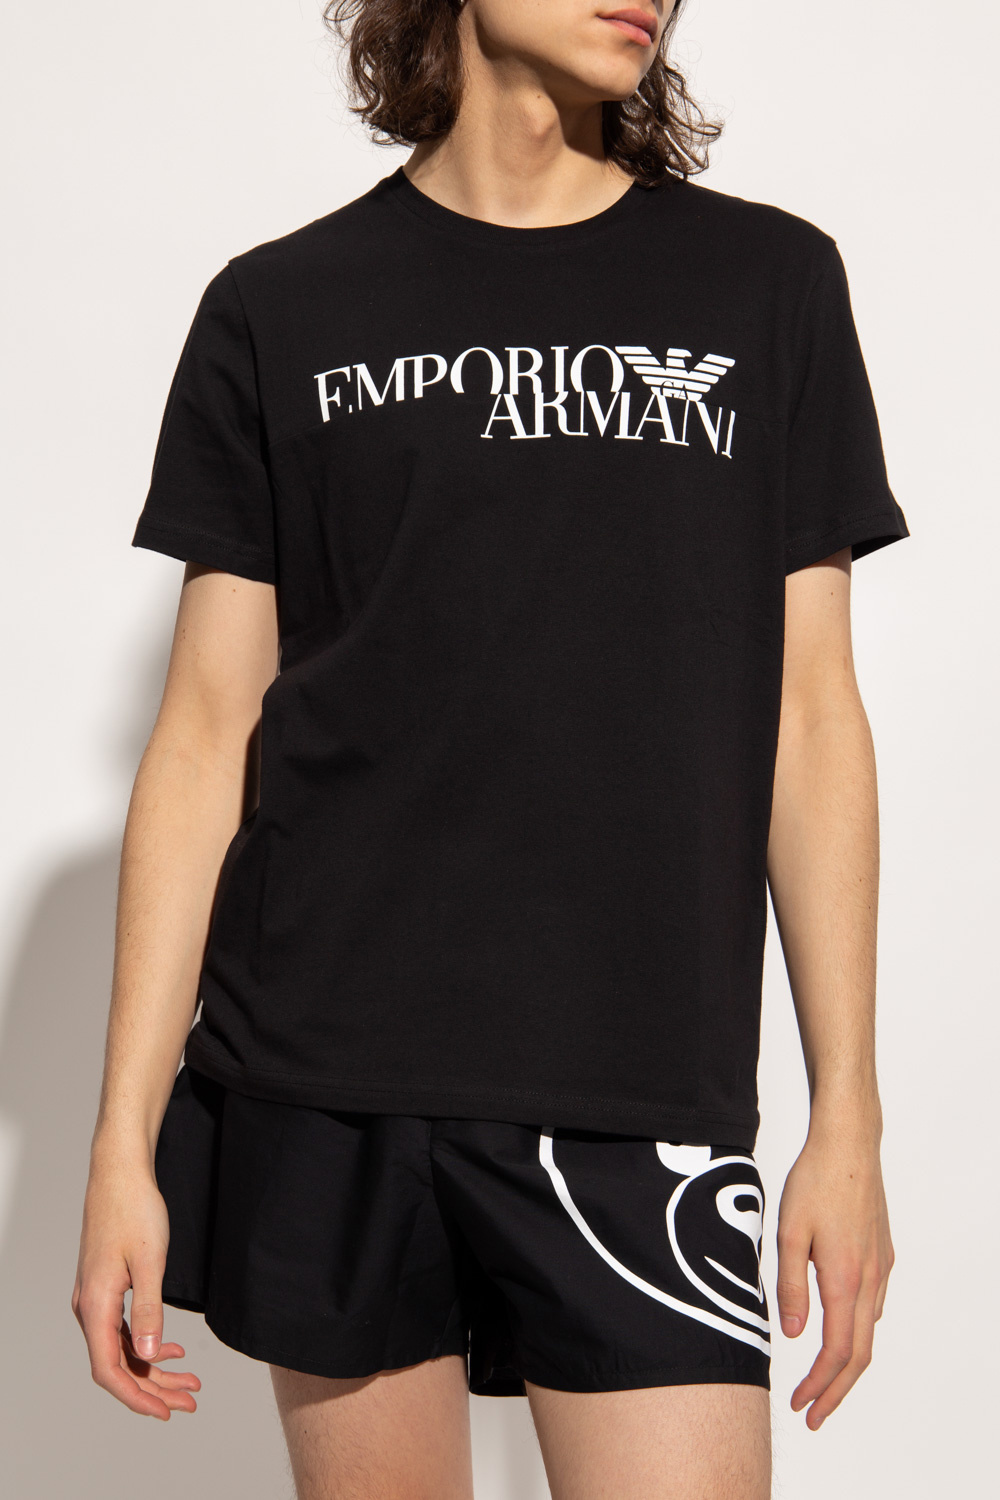 Emporio lotus armani Logo T-shirt